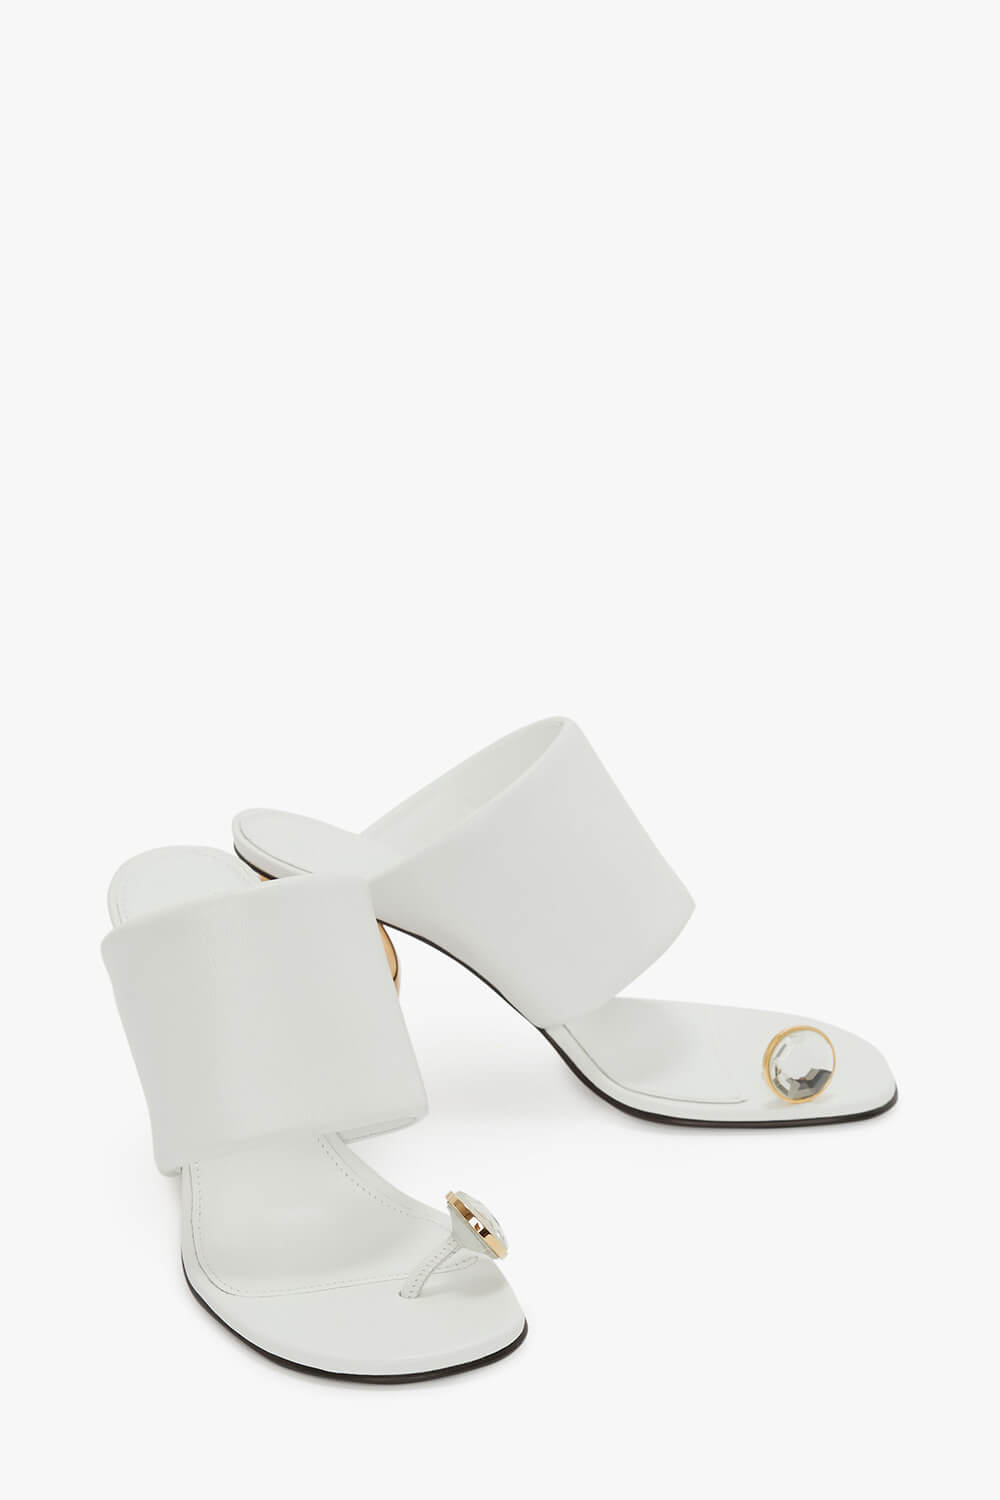 Diamond Faux Leather Square Toe Chain Heel Sandal - White